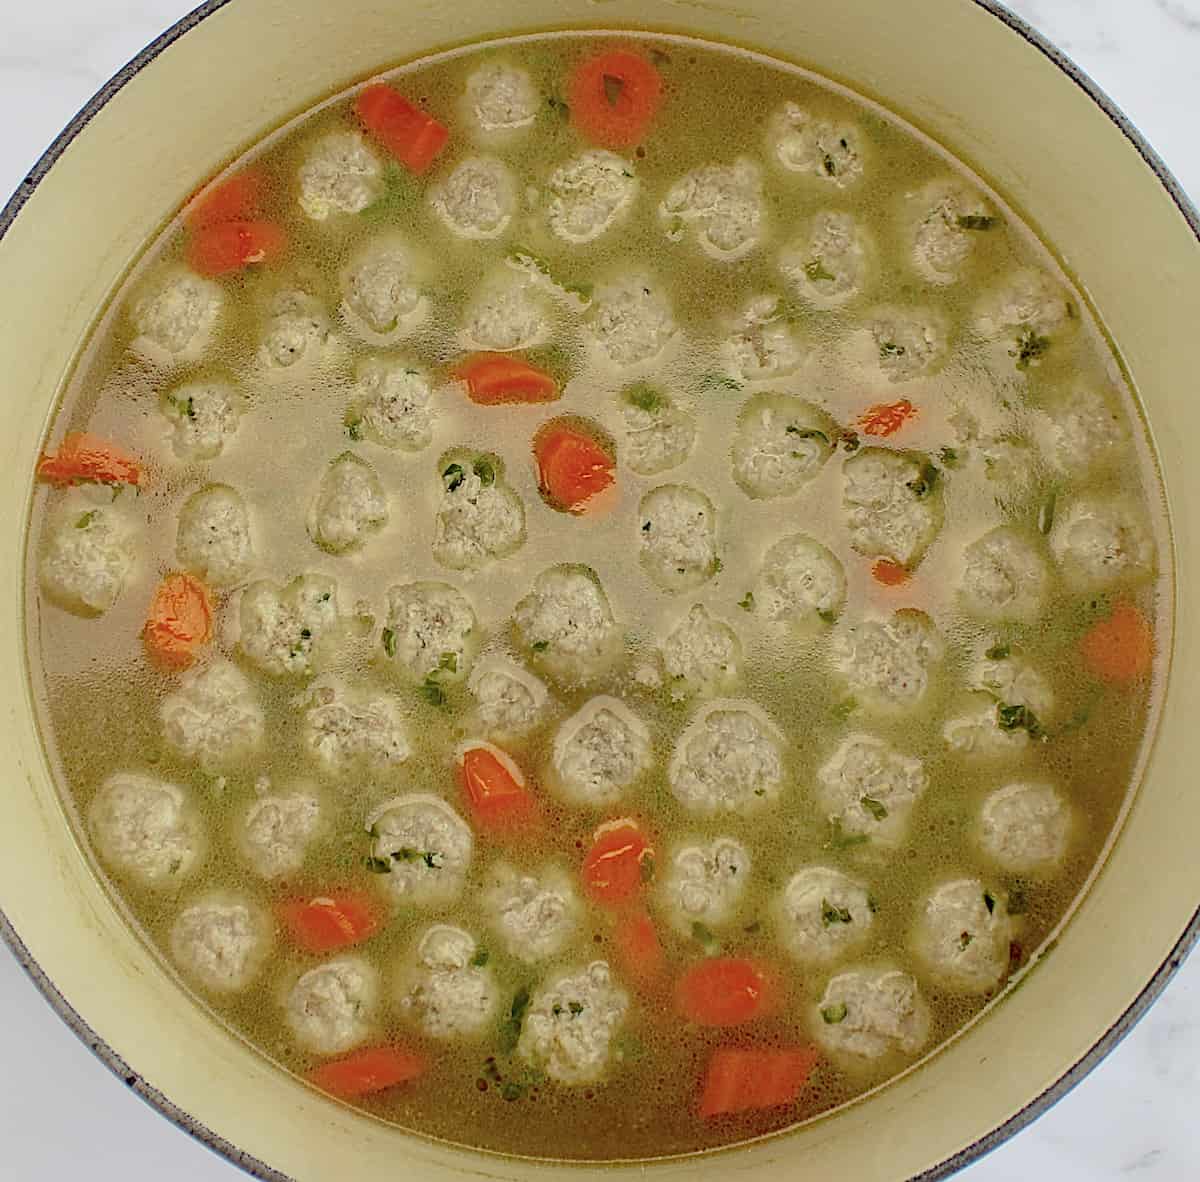 Italian Wedding Soup with mini meatballs and carrots